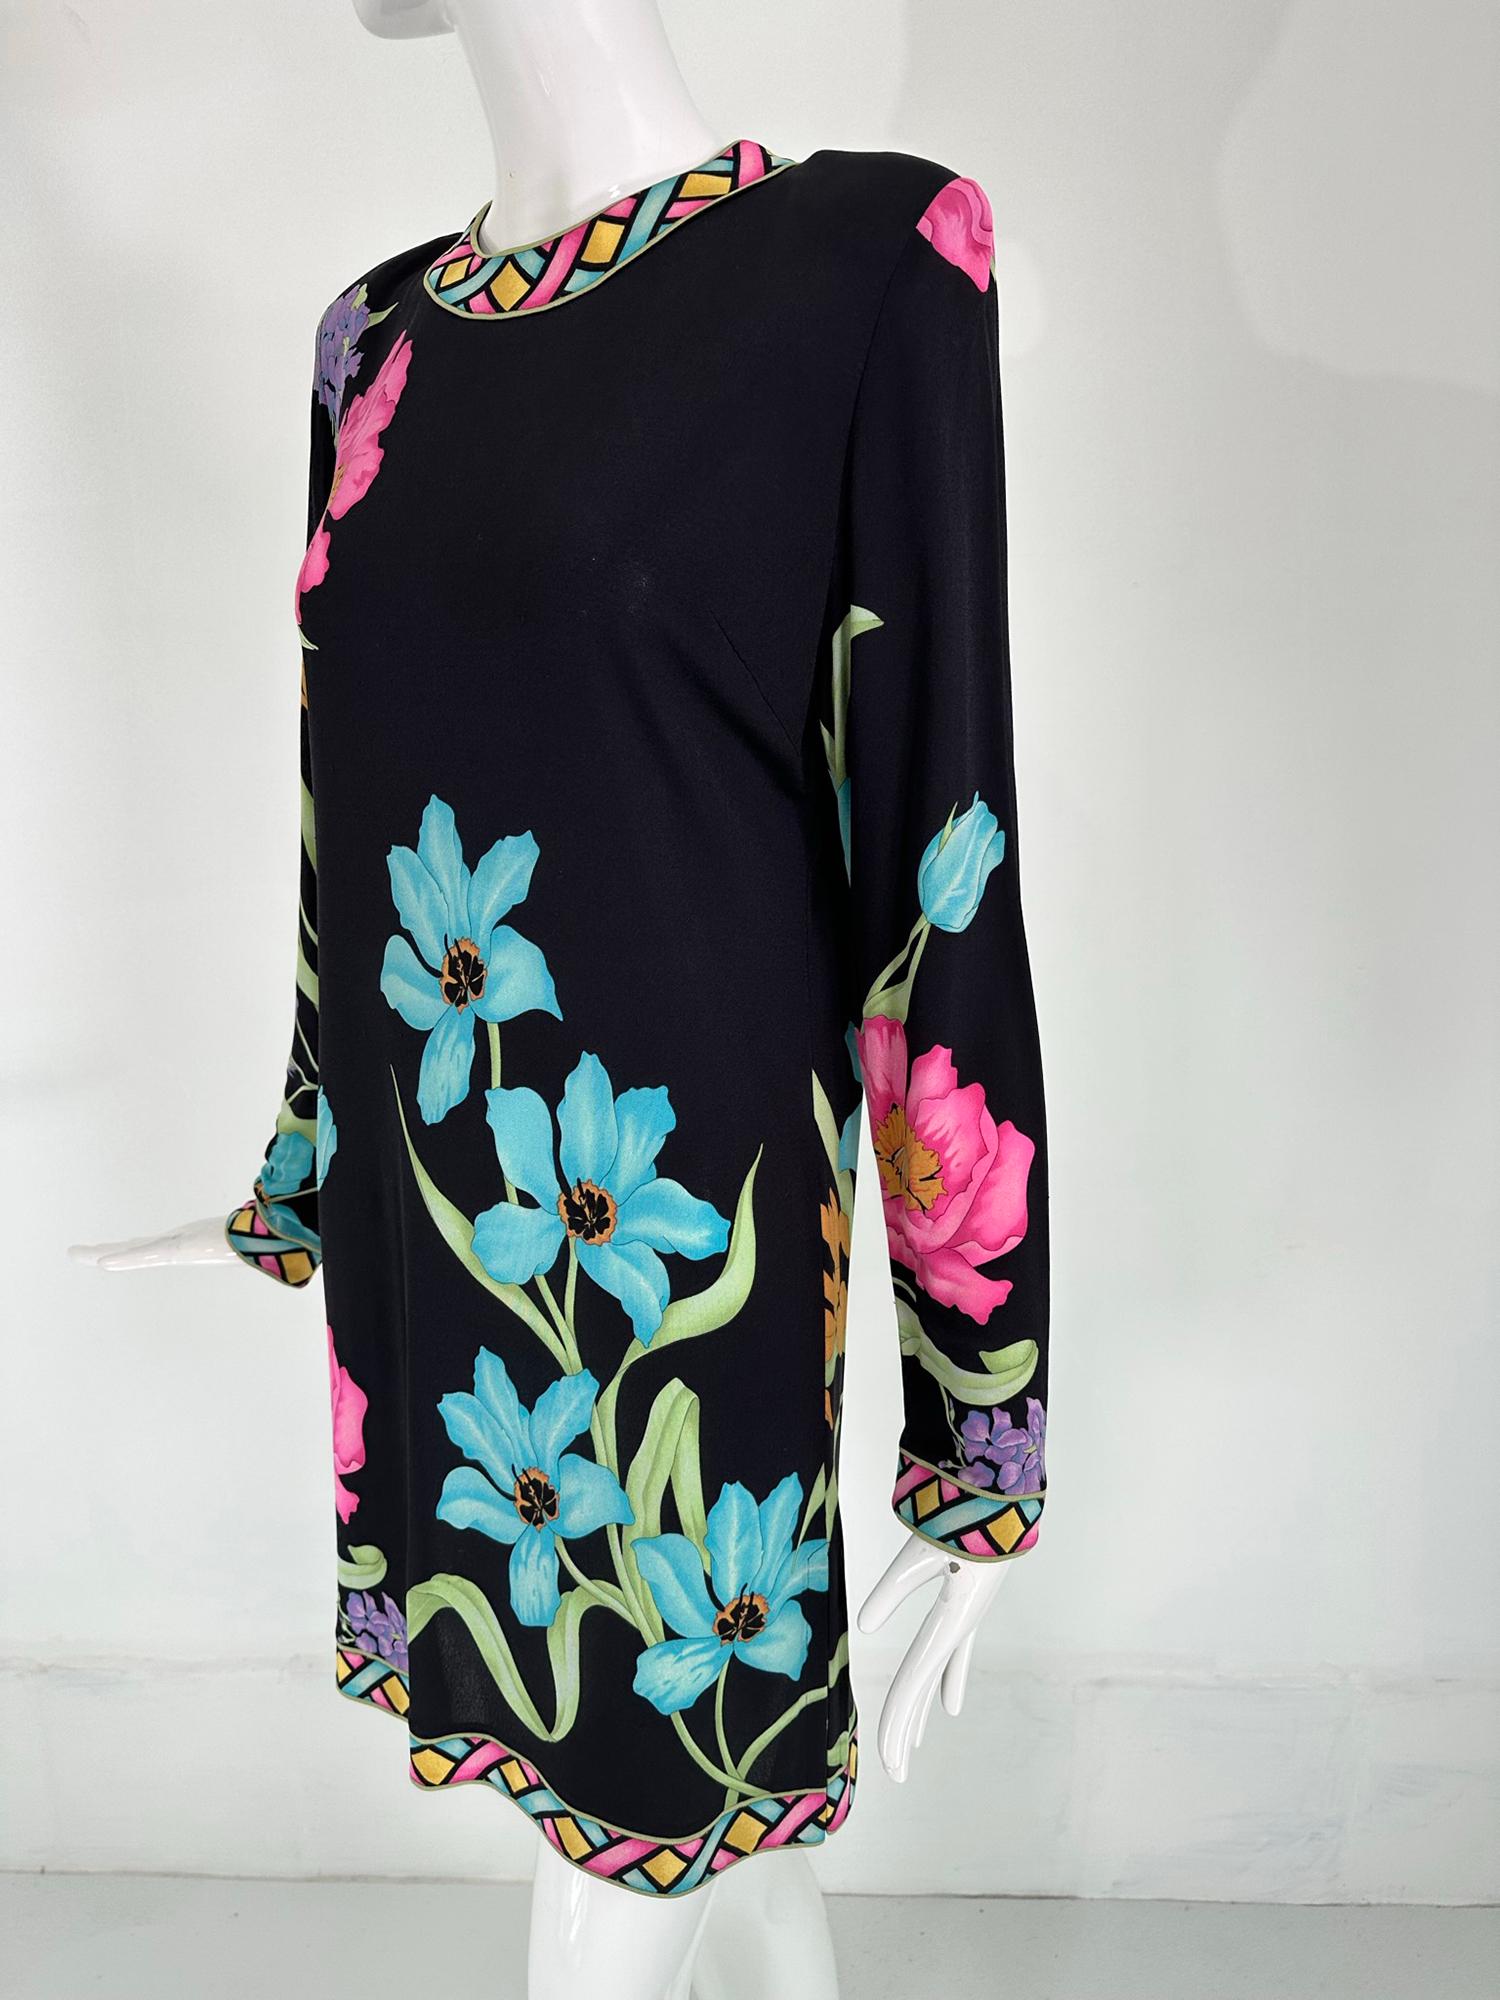 Averaro Bessi Spectacular Silk Vibrant Floral Tunic Dress 12  For Sale 8